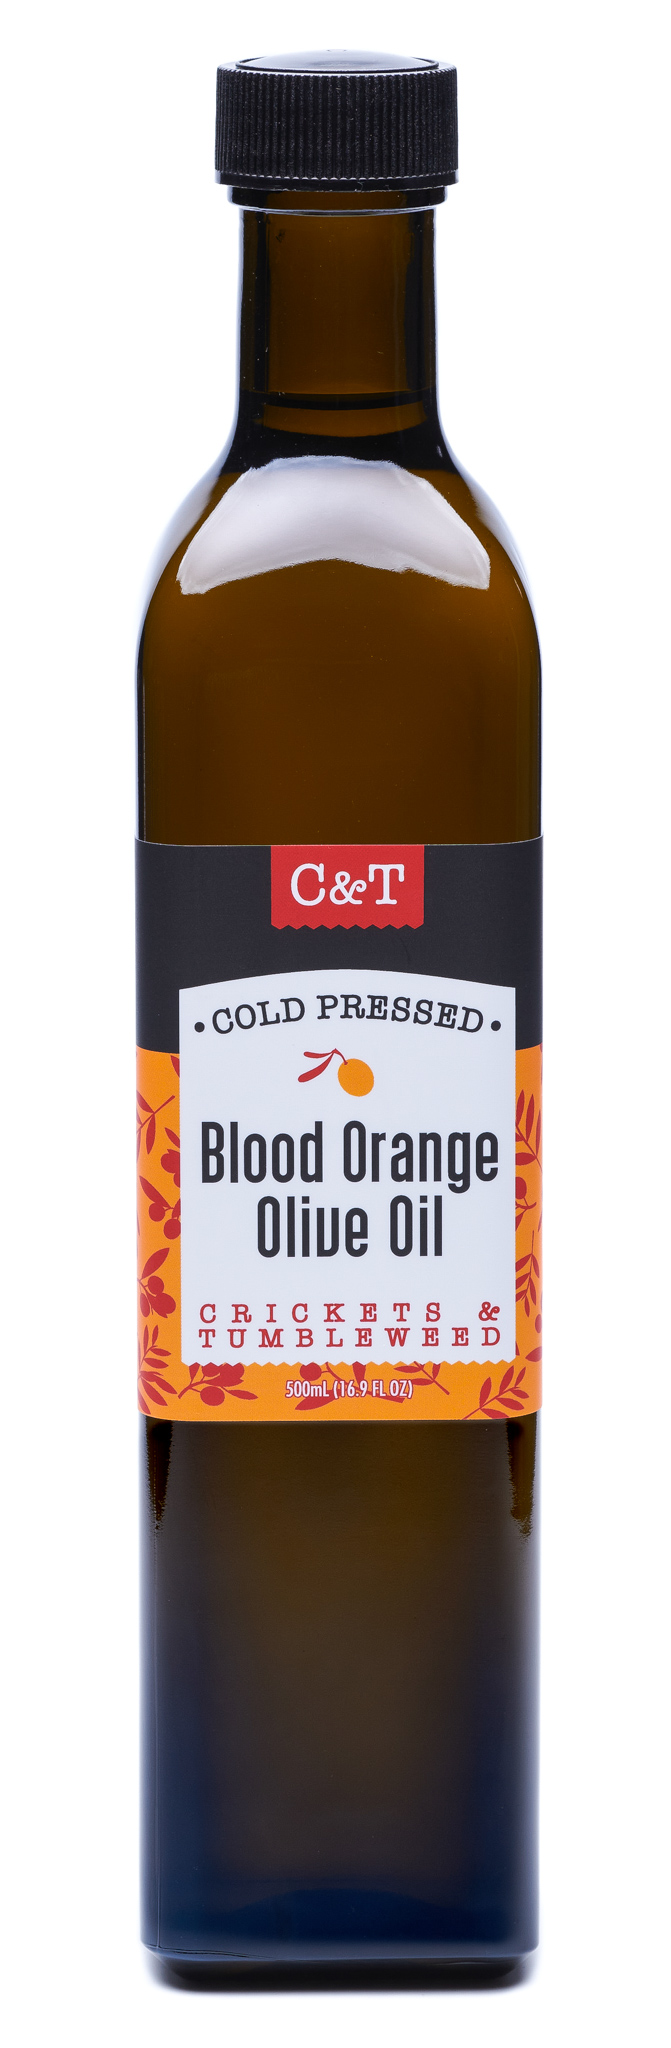 Product Image for C&T Olive Oil Blood Orange